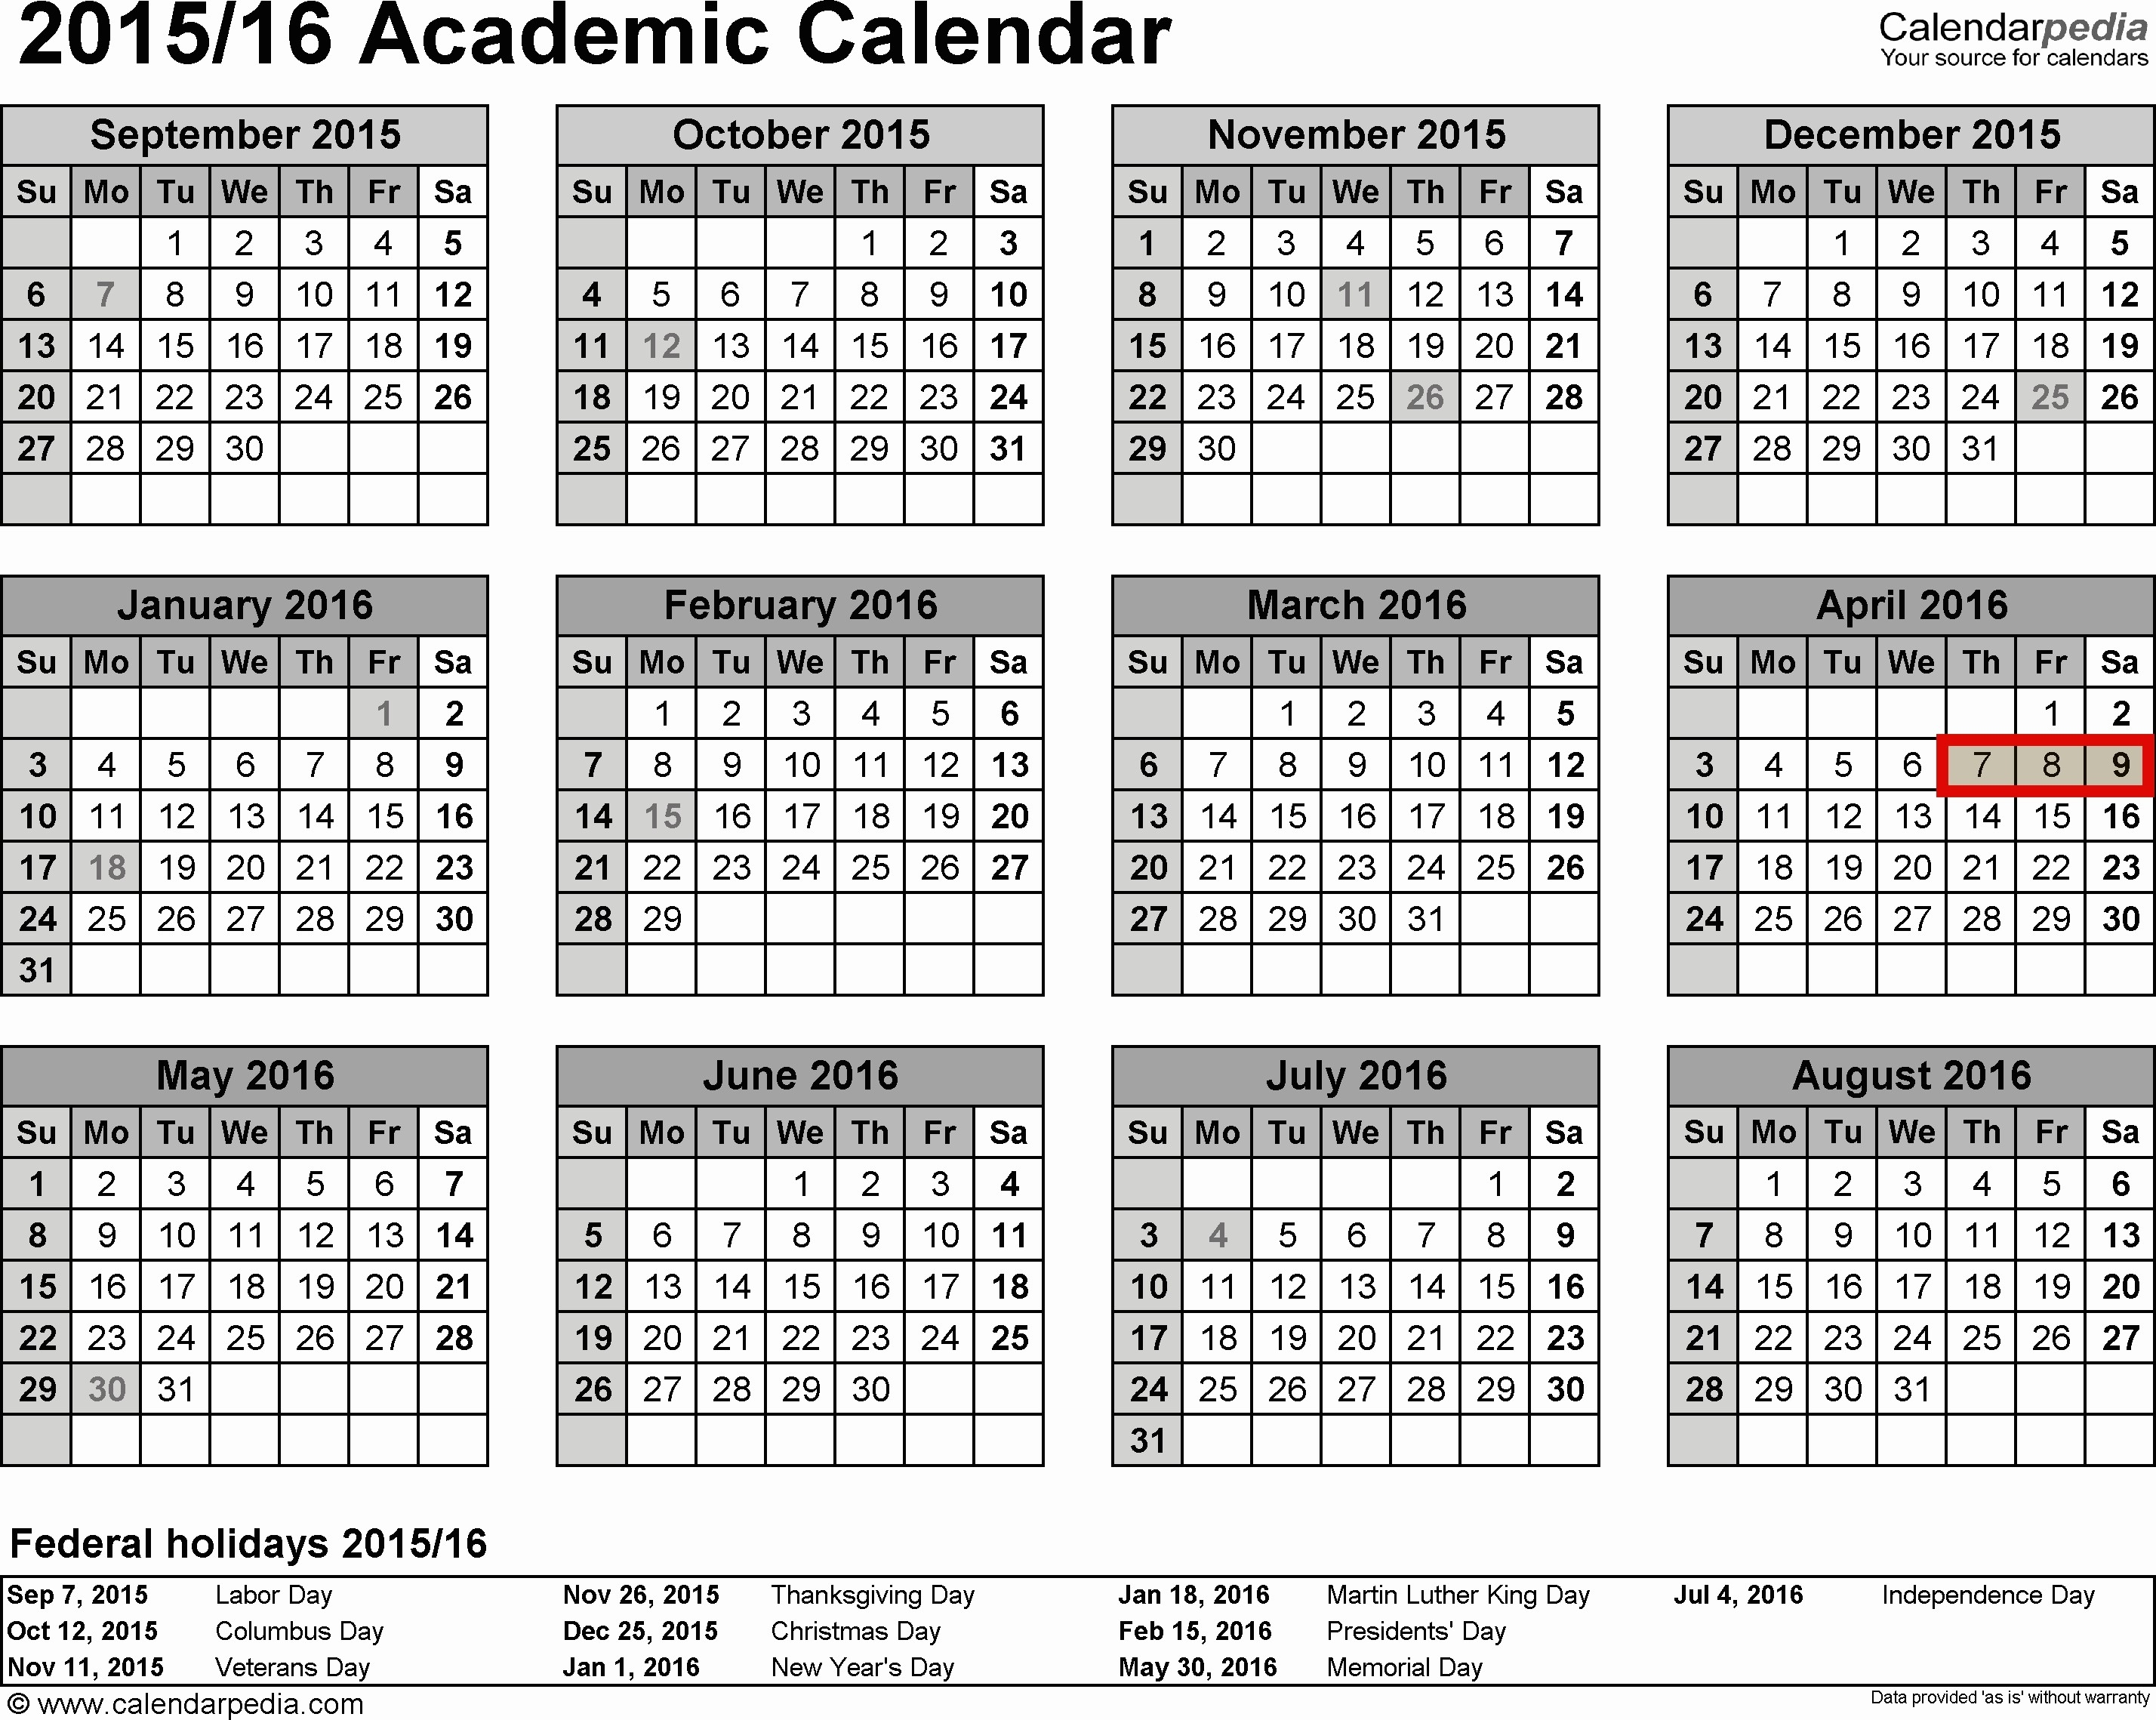 rice-university-academic-calendar-qualads